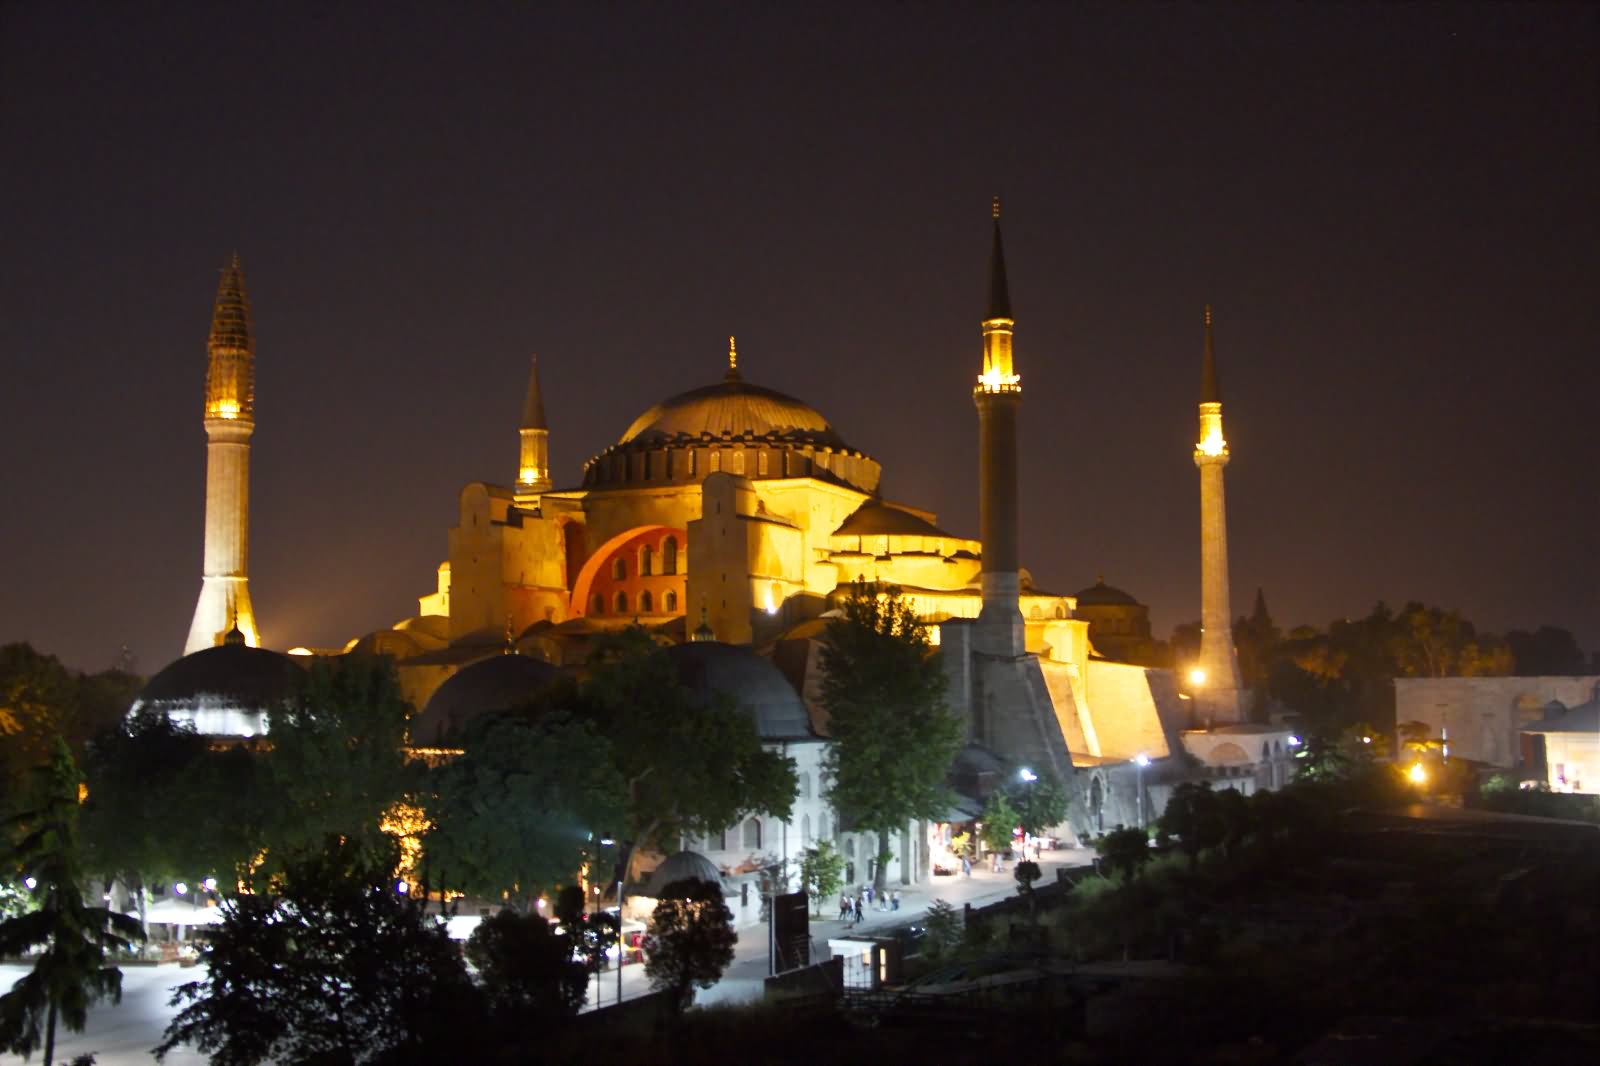 The Hagia Sophia Lit Up at Night